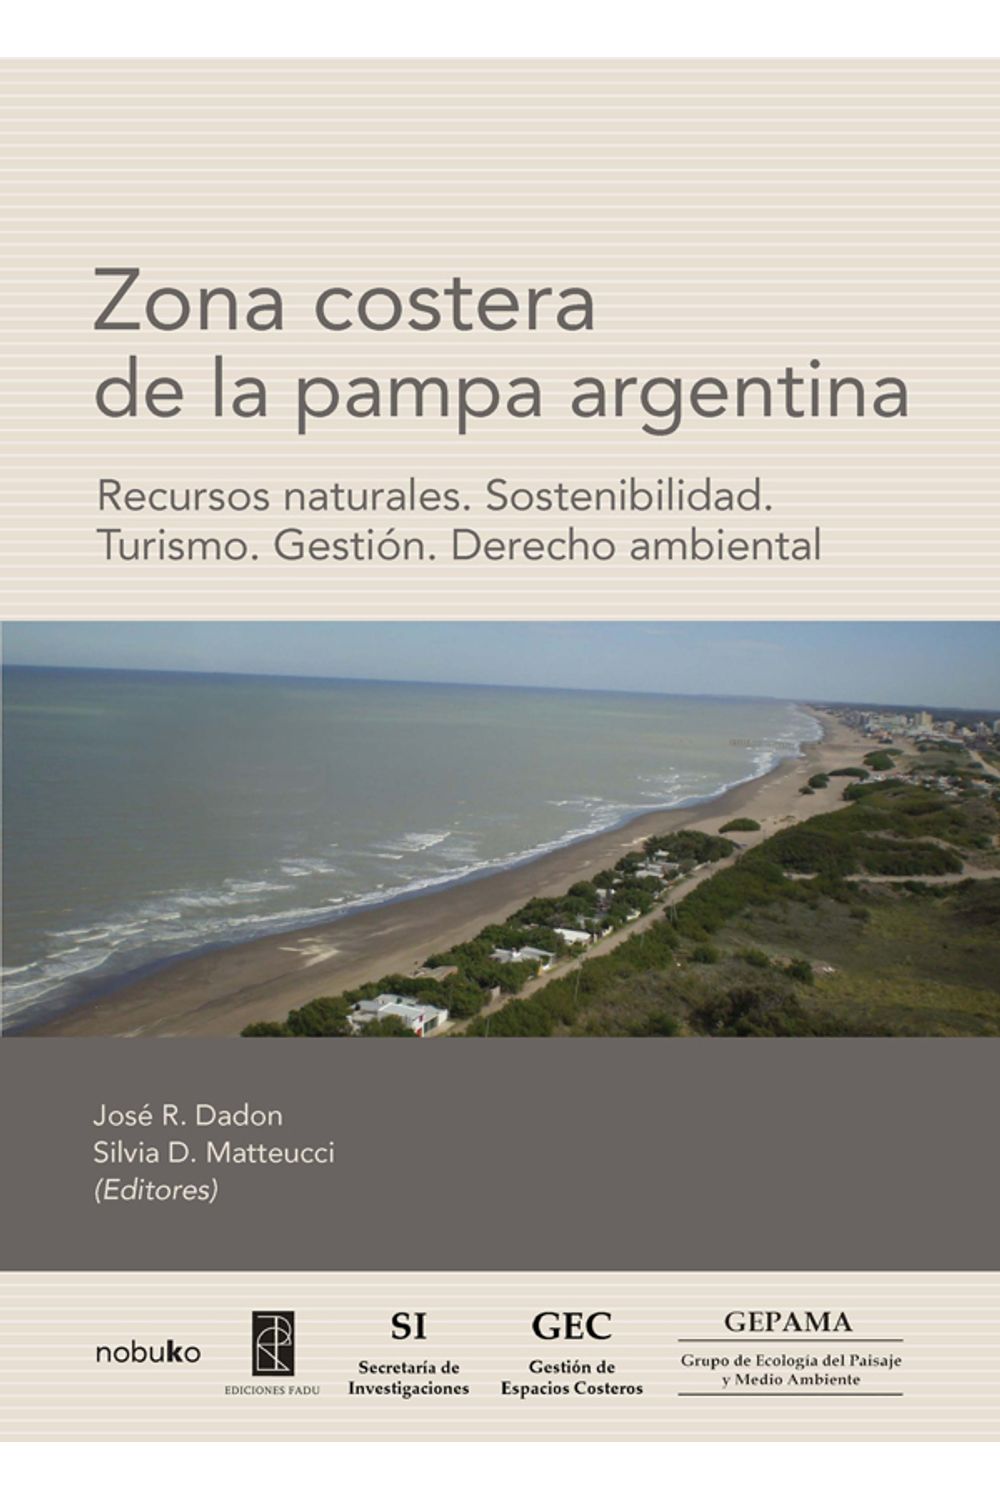 bm-zona-costera-de-la-pampa-argentina-nobukodiseno-editorial-9789875842304